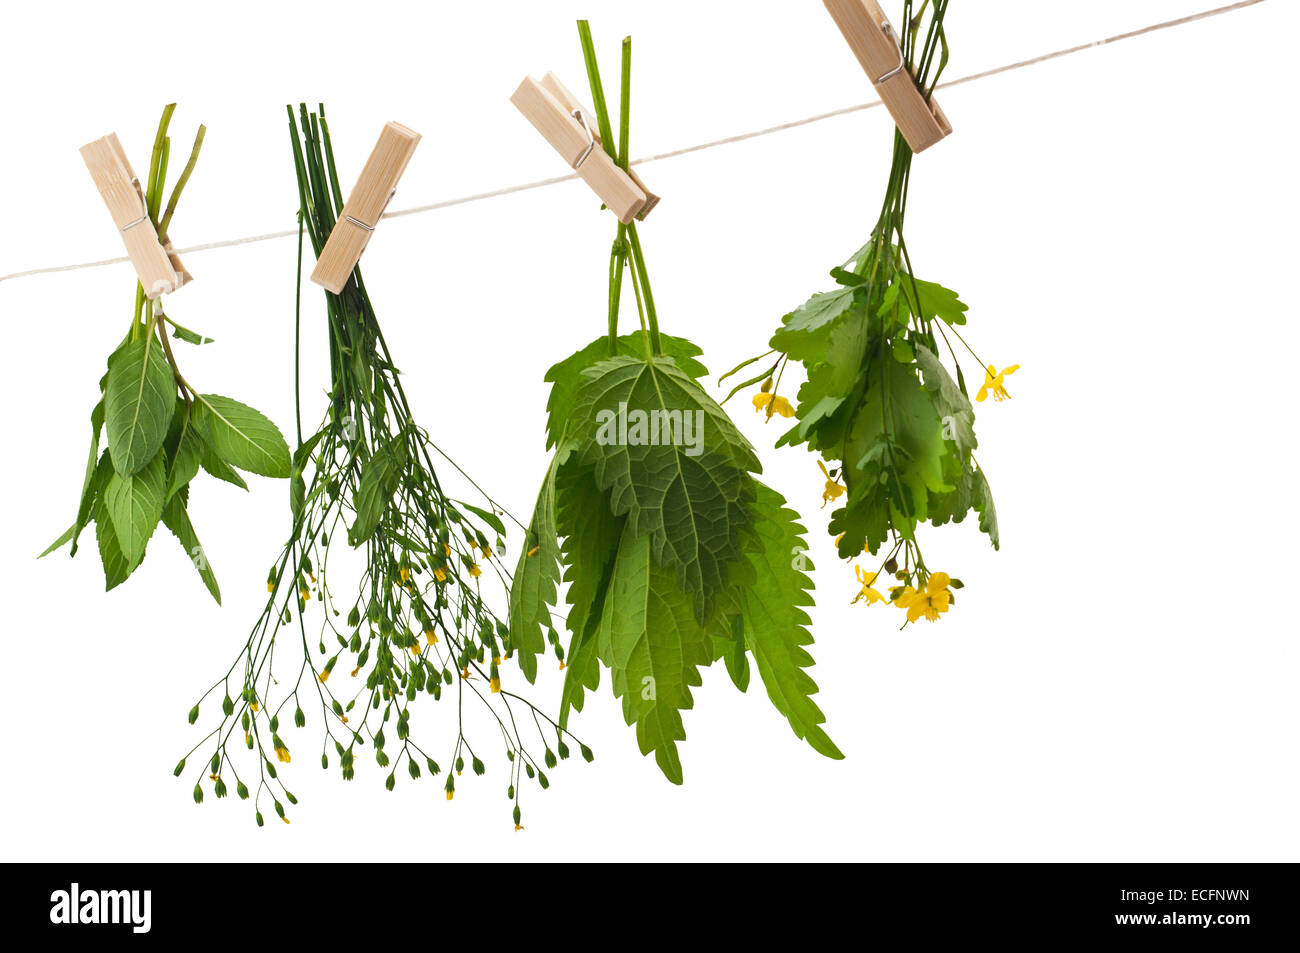 Herbs hanging upside-down Stock Photo